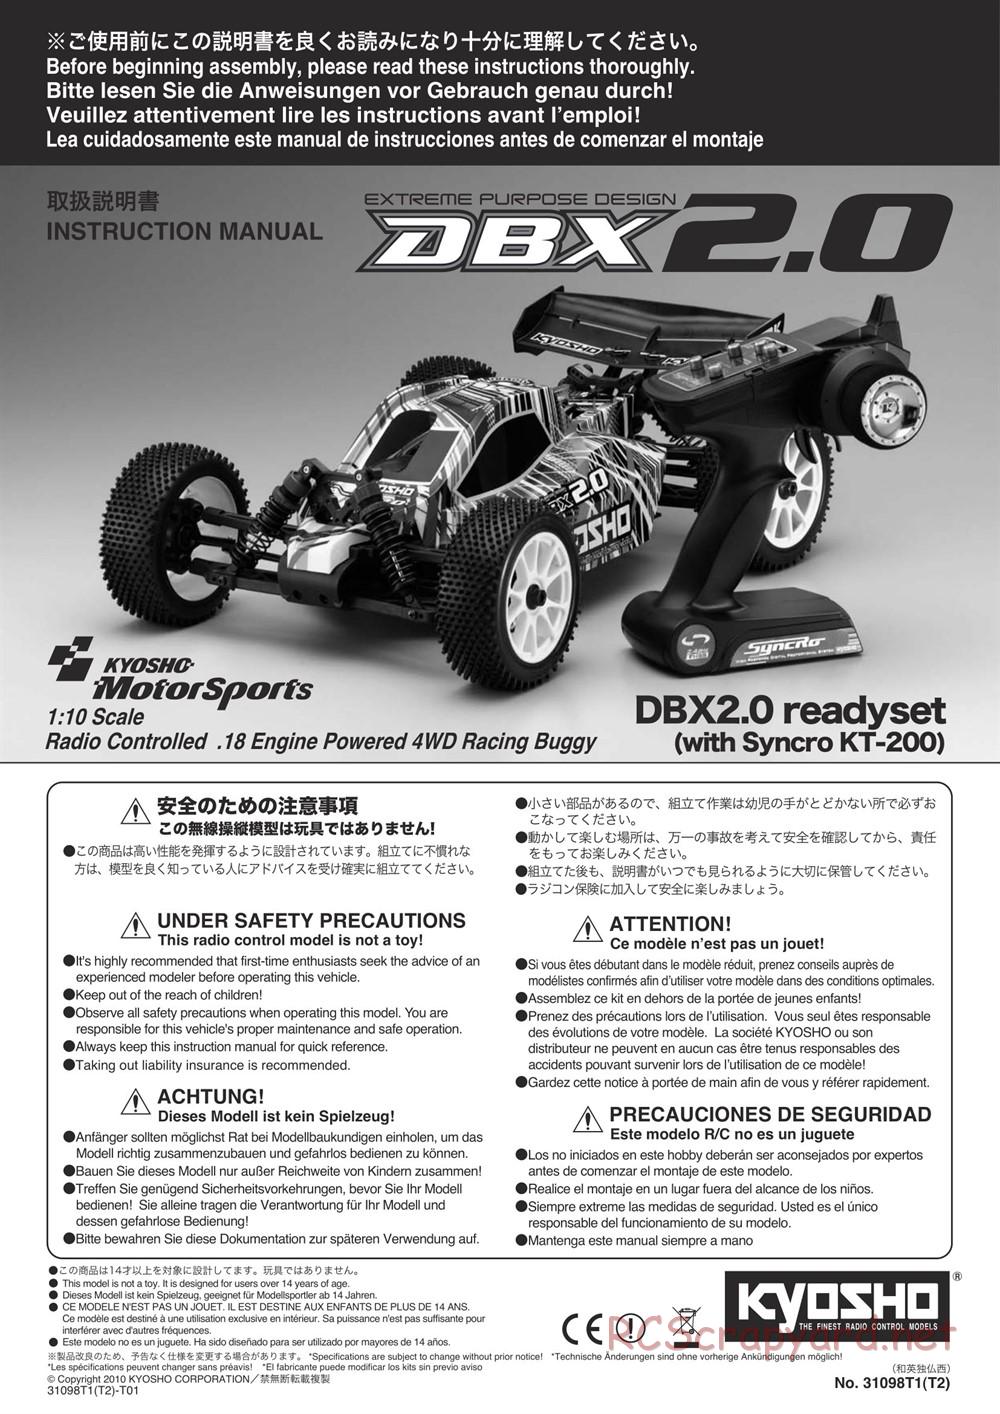 Kyosho - DBX 2.0 - Manual - Page 1